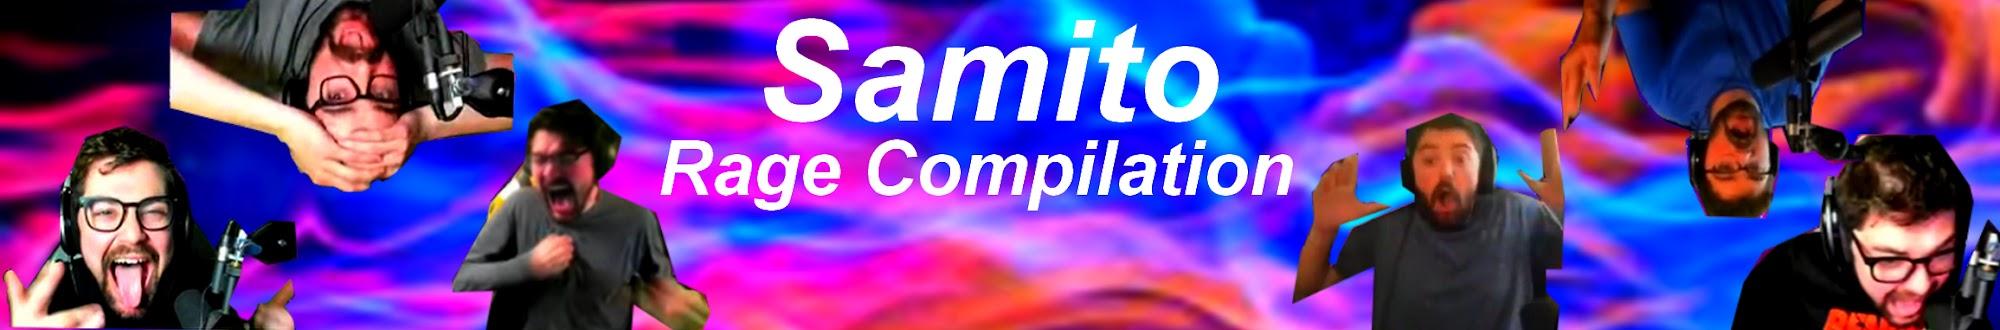 Samito Rage Compilation